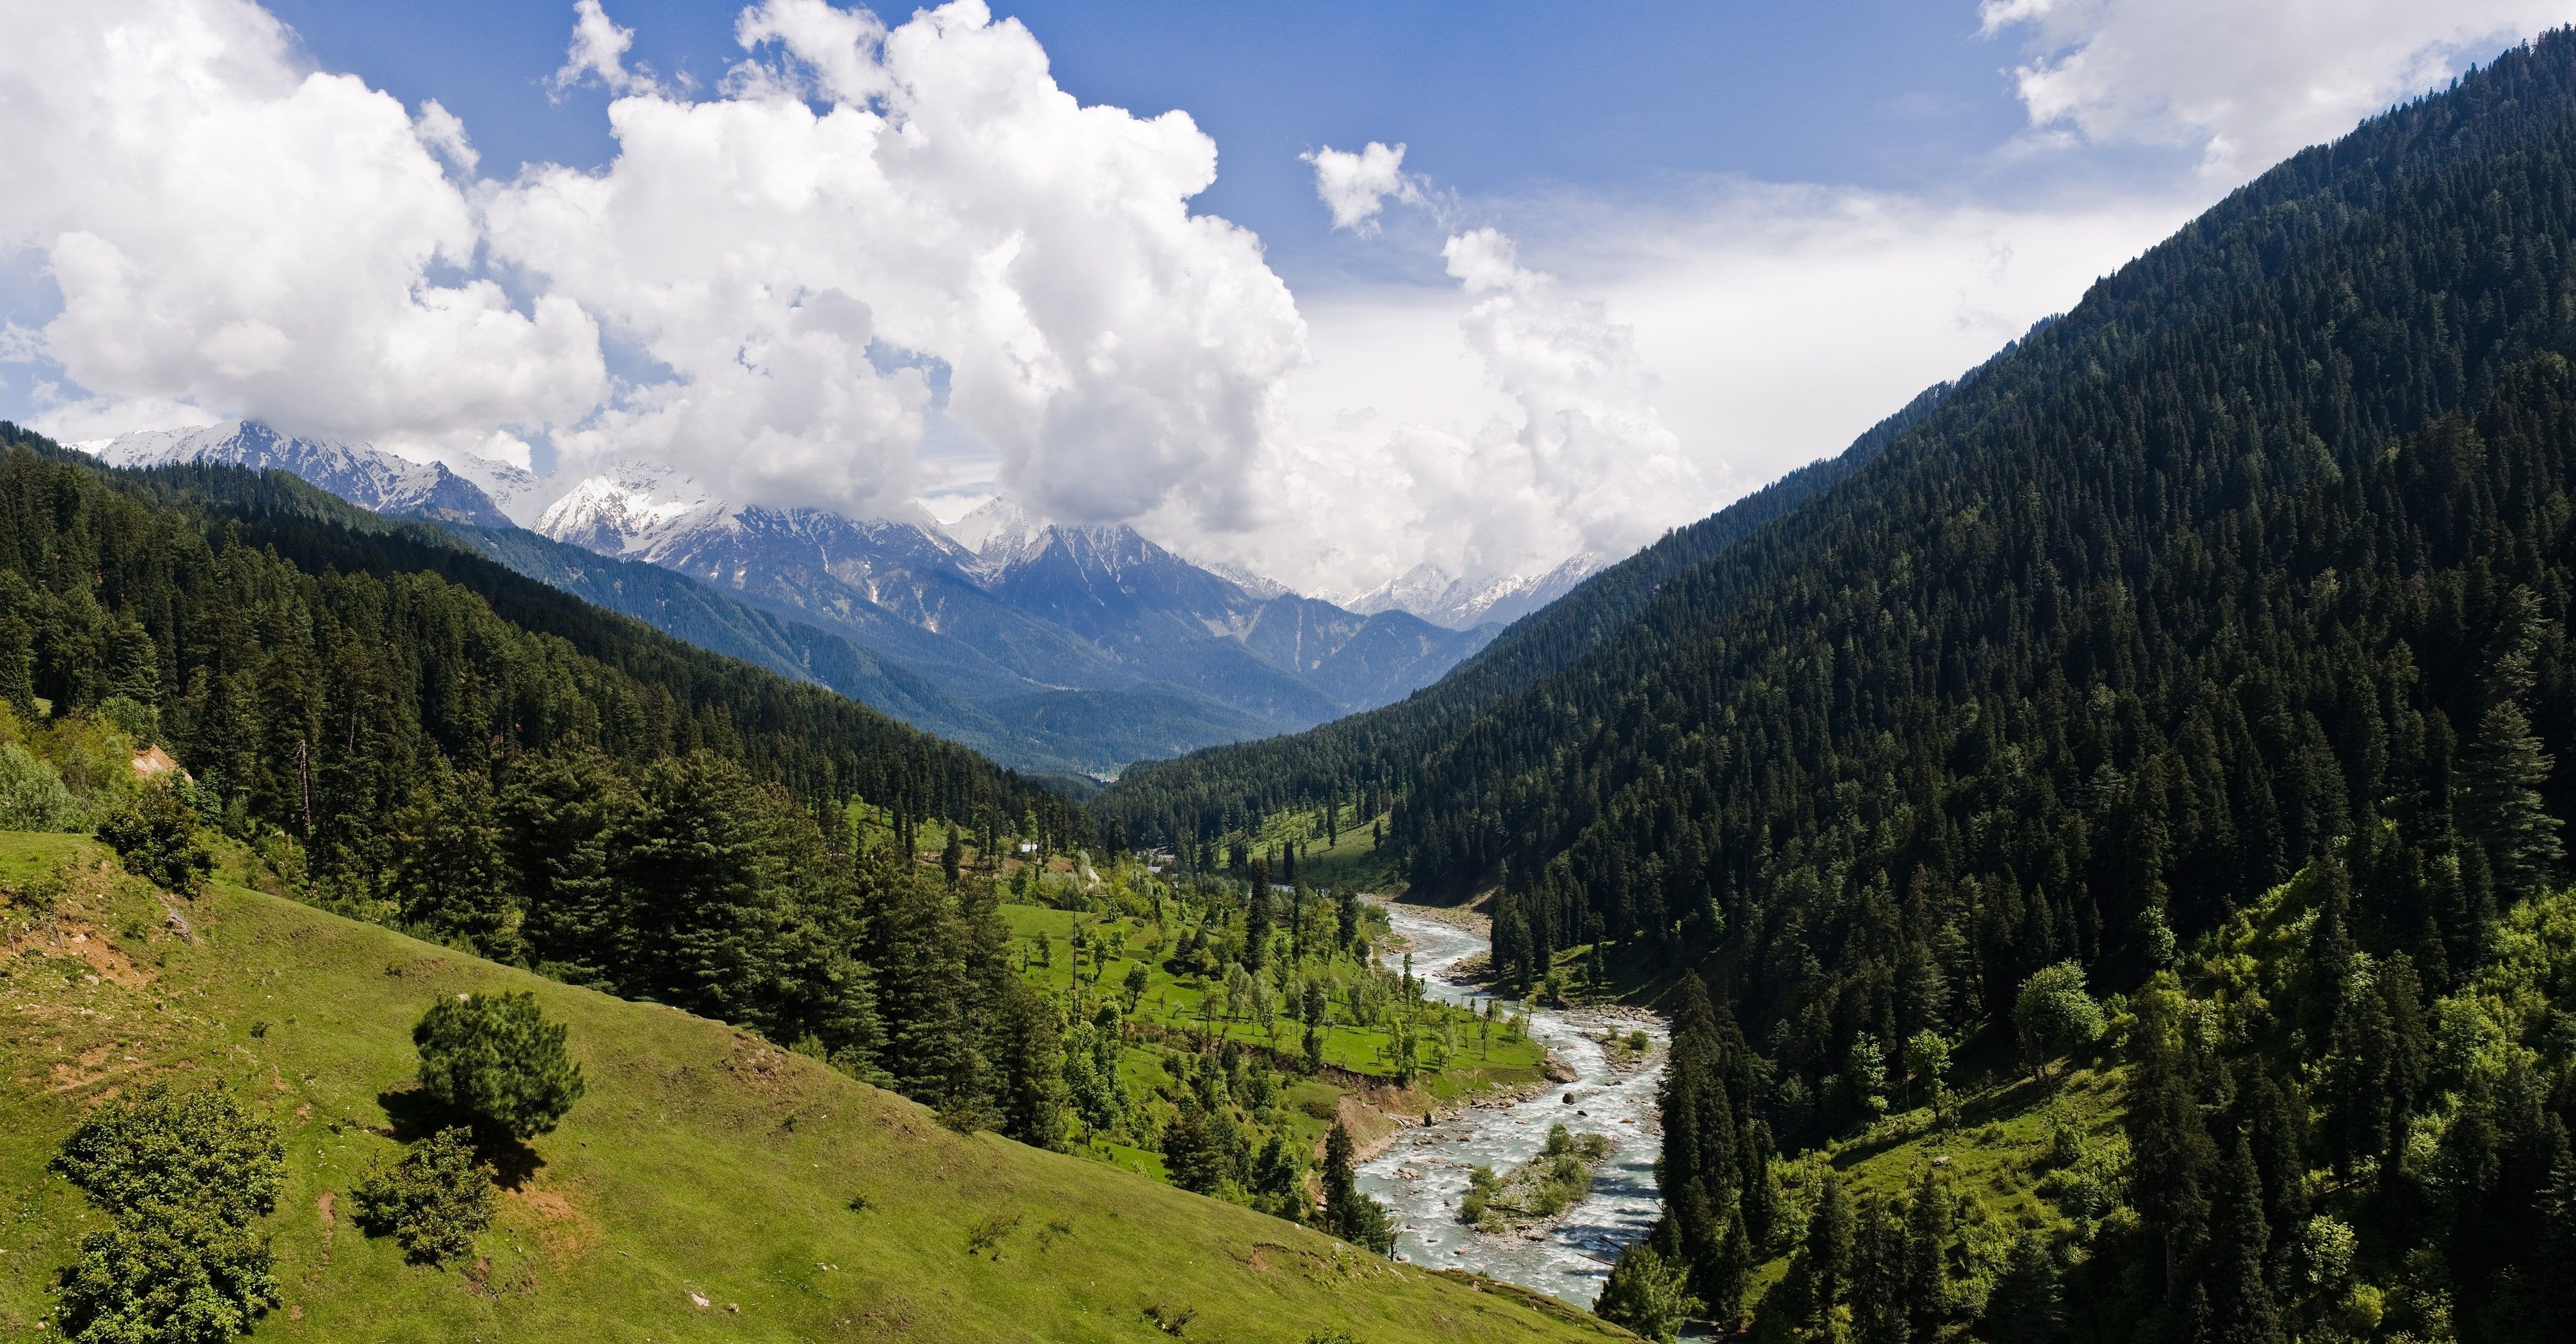 nature #landscape #valley #Kashmir #mountains #forest #grass #green snowy peak #clouds #river. Beautiful places to visit, Places to visit, Cool places to visit